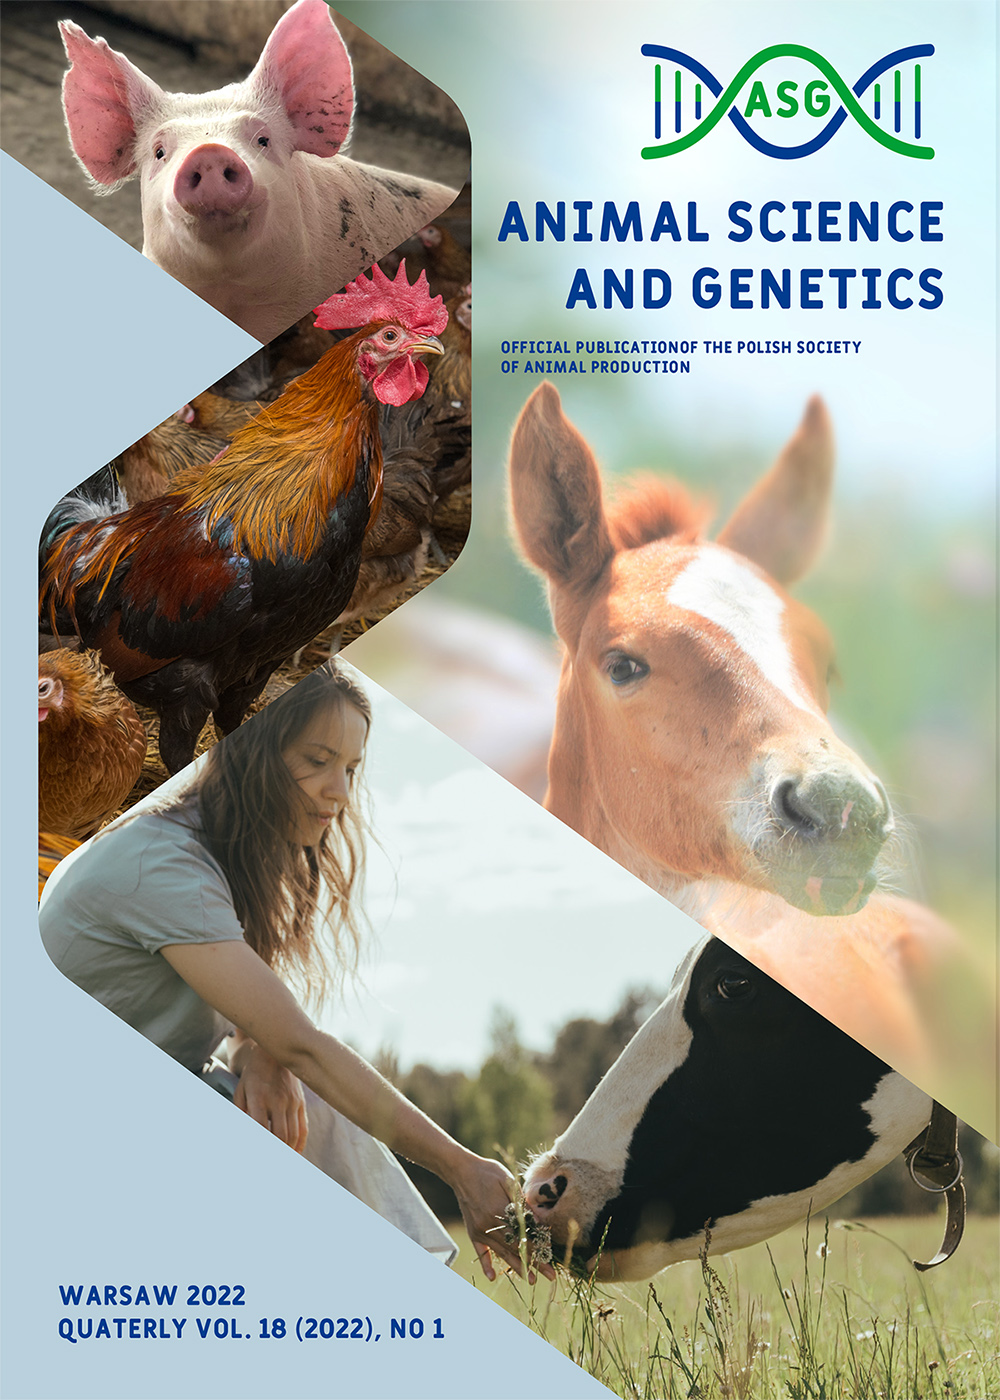 ANIMAL SCIENCE AND GENETICS